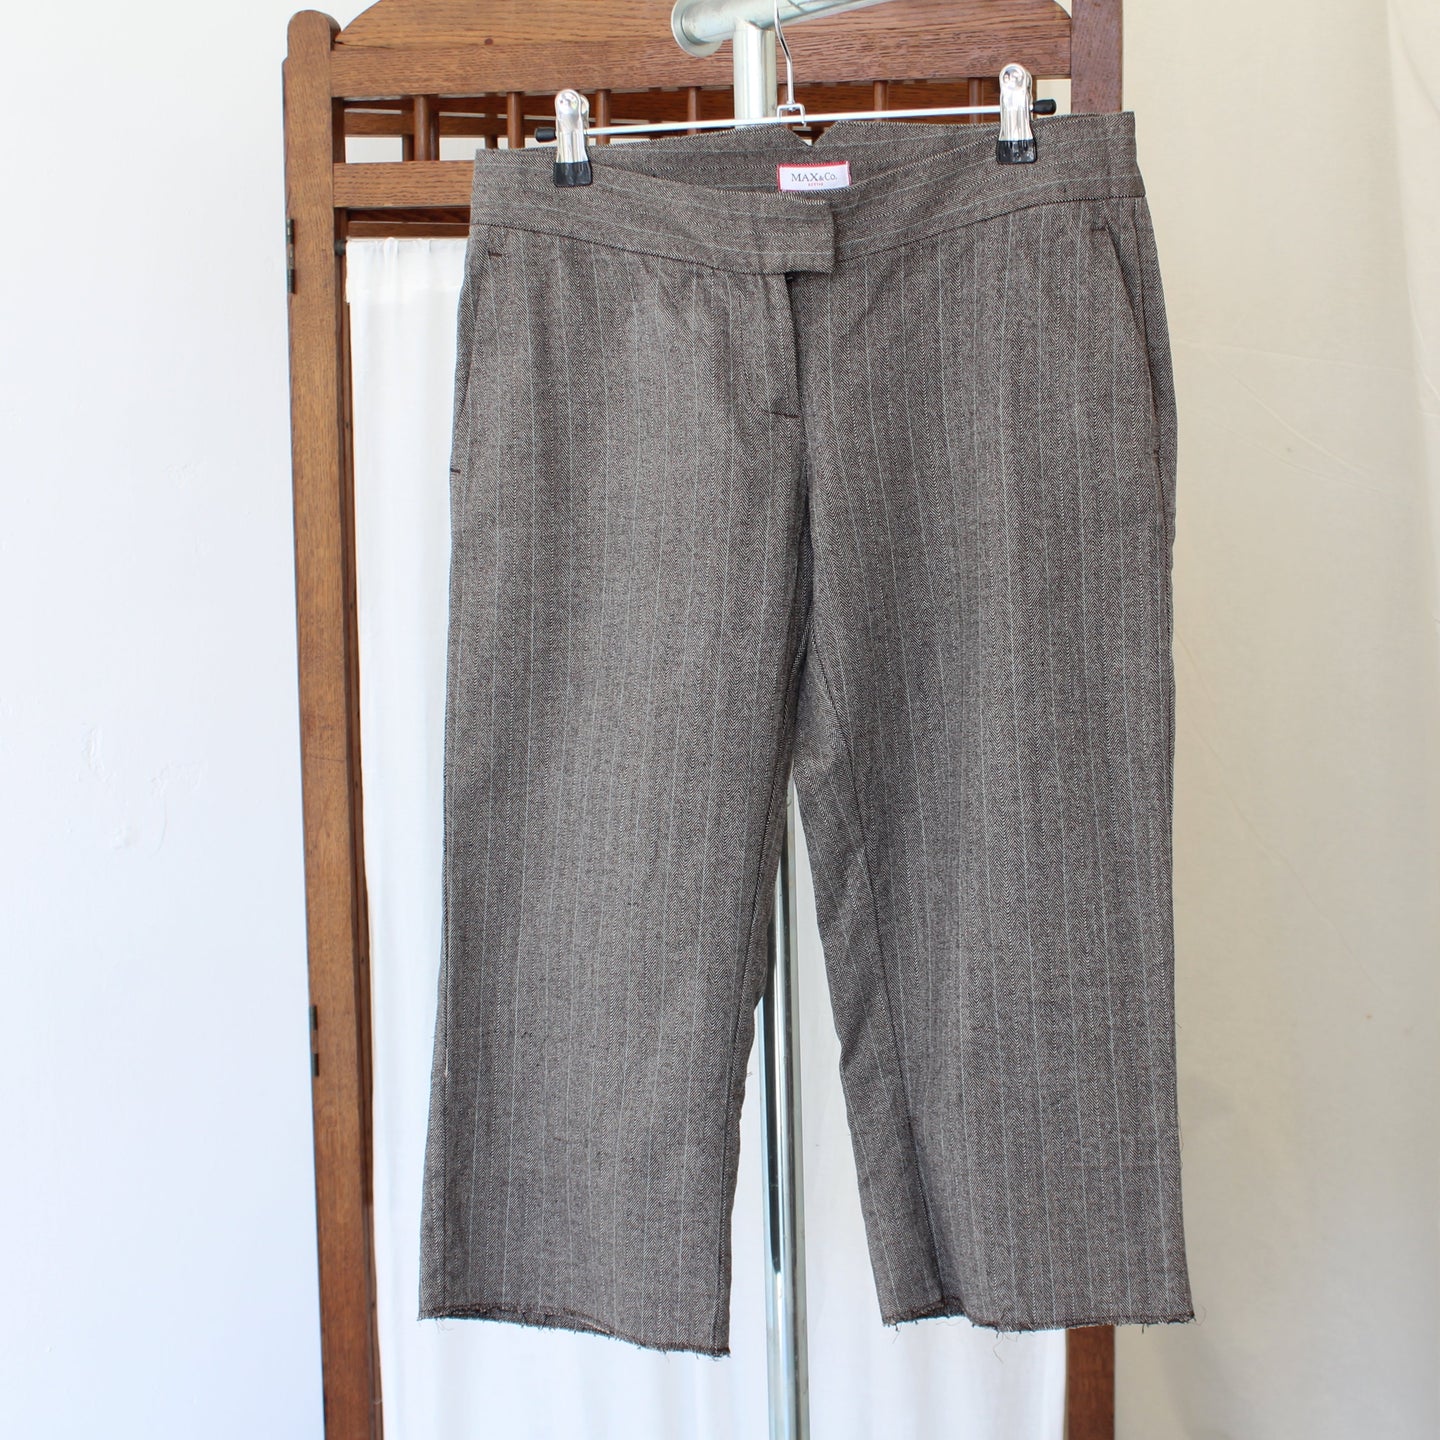 Altered Max & Co capri pants, size S/M